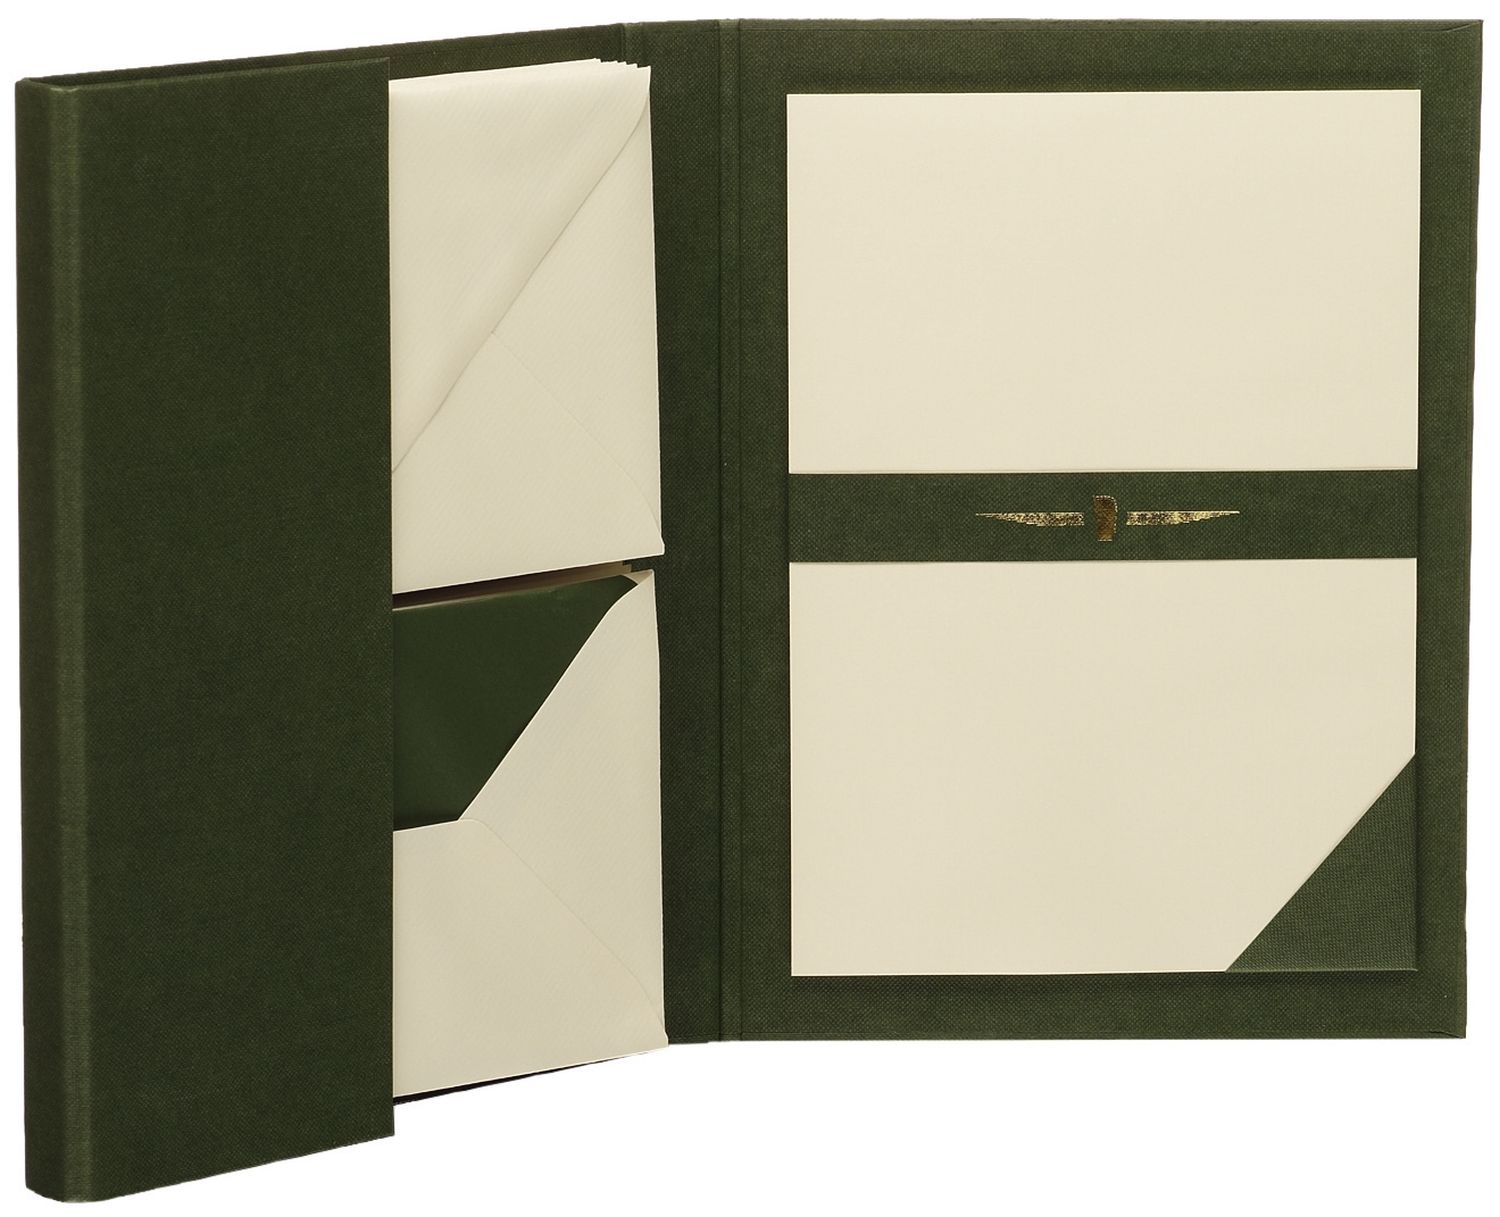 Briefpapiermappe Rössler Paper Royal 1024831008, grün, 25 Blatt DIN A5, 15 Umschläge DIN C6, chamoise gerippt